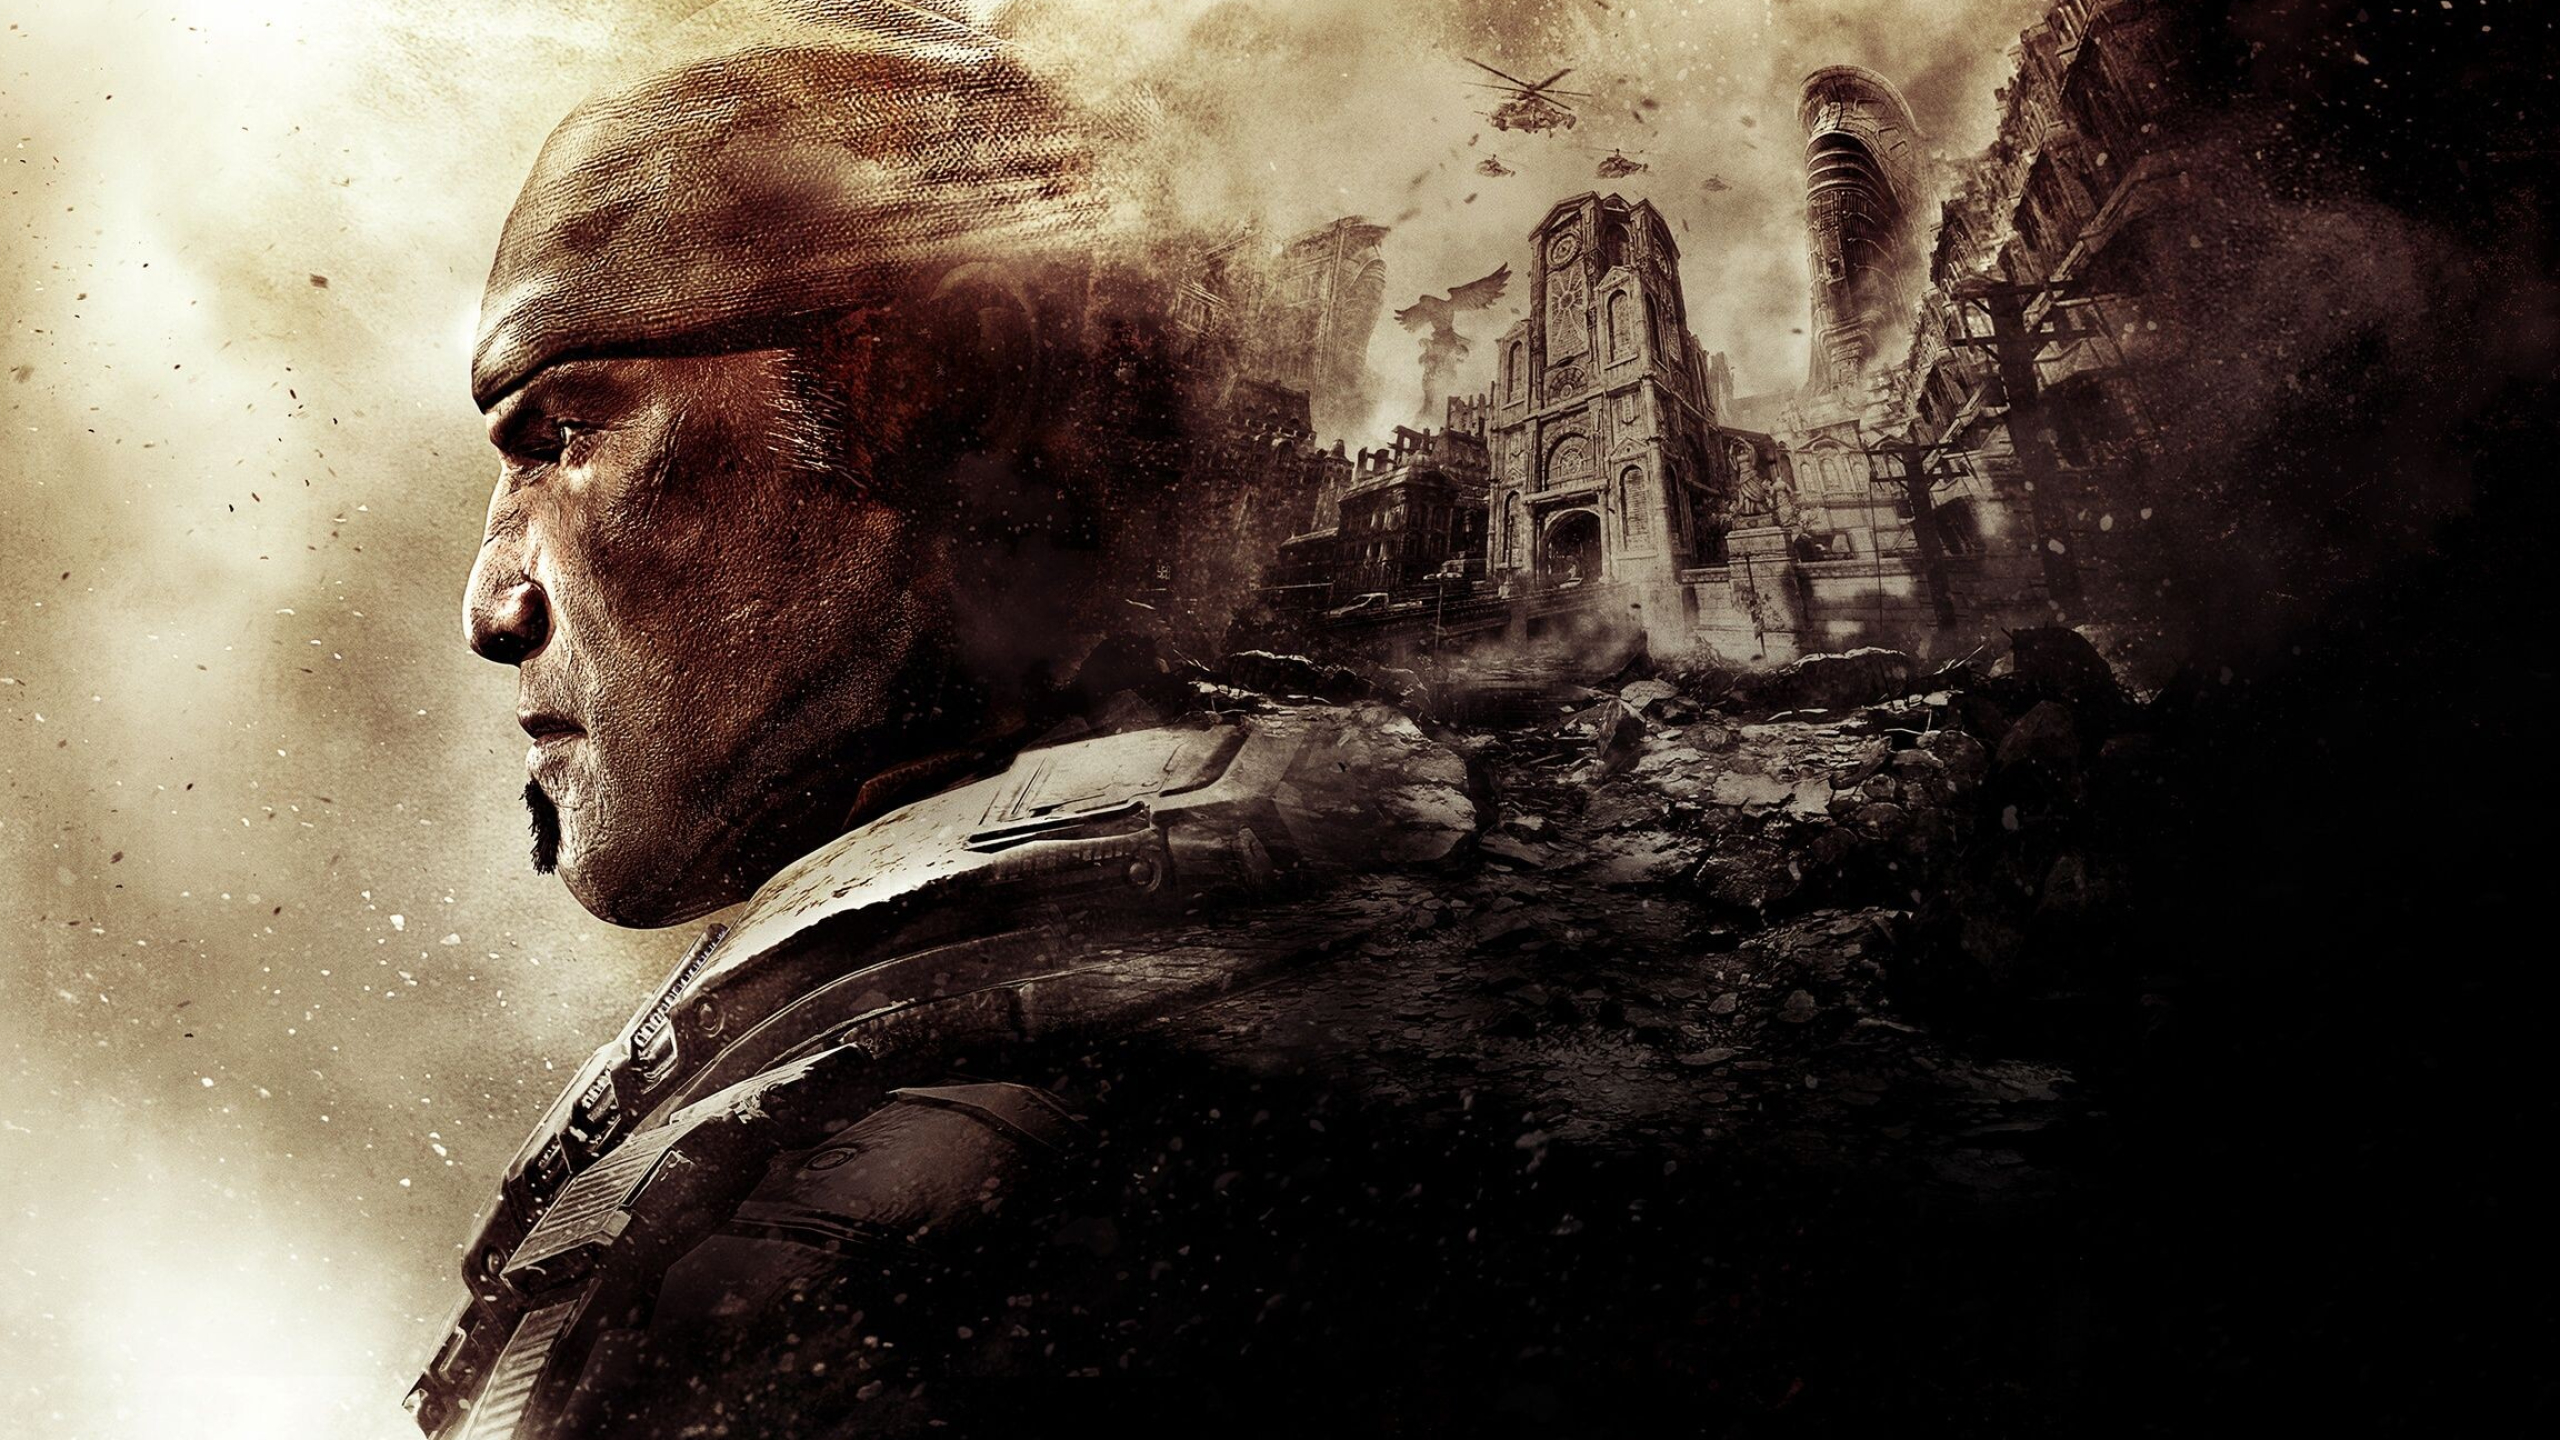 Gears of War wallpapers, Epic battle scenes, Gaming artwork, Adrenaline-pumping visuals, 2560x1440 HD Desktop